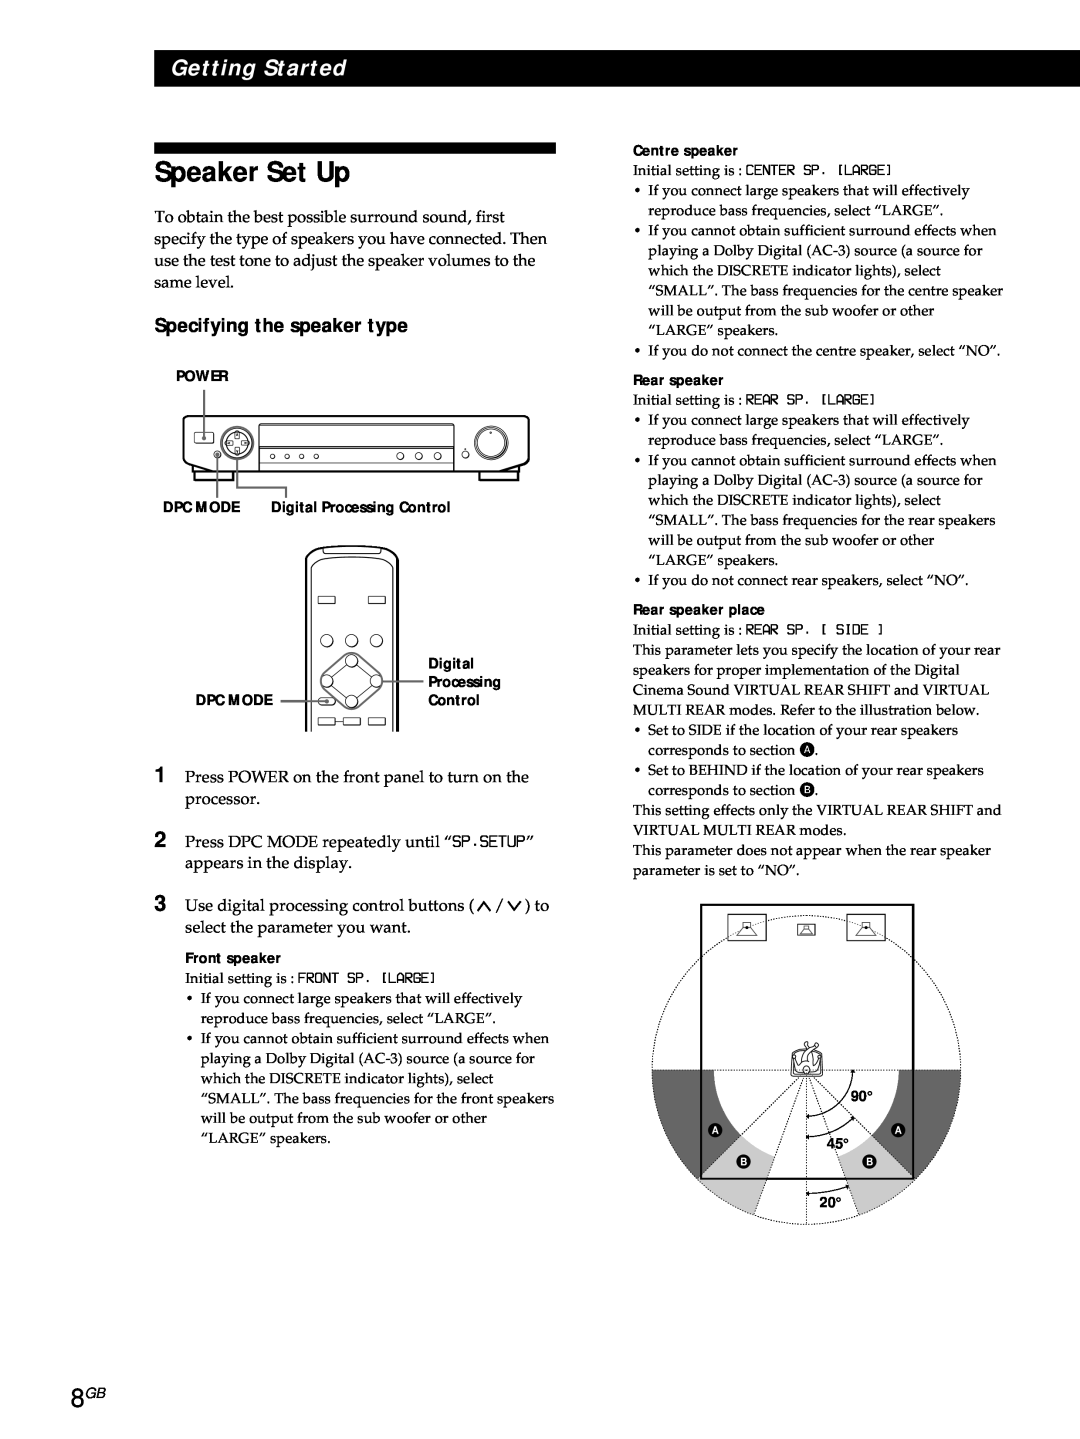 Sony SDP-E800 operating instructions Speaker Set Up, Specifying the speaker type, Getting Started 